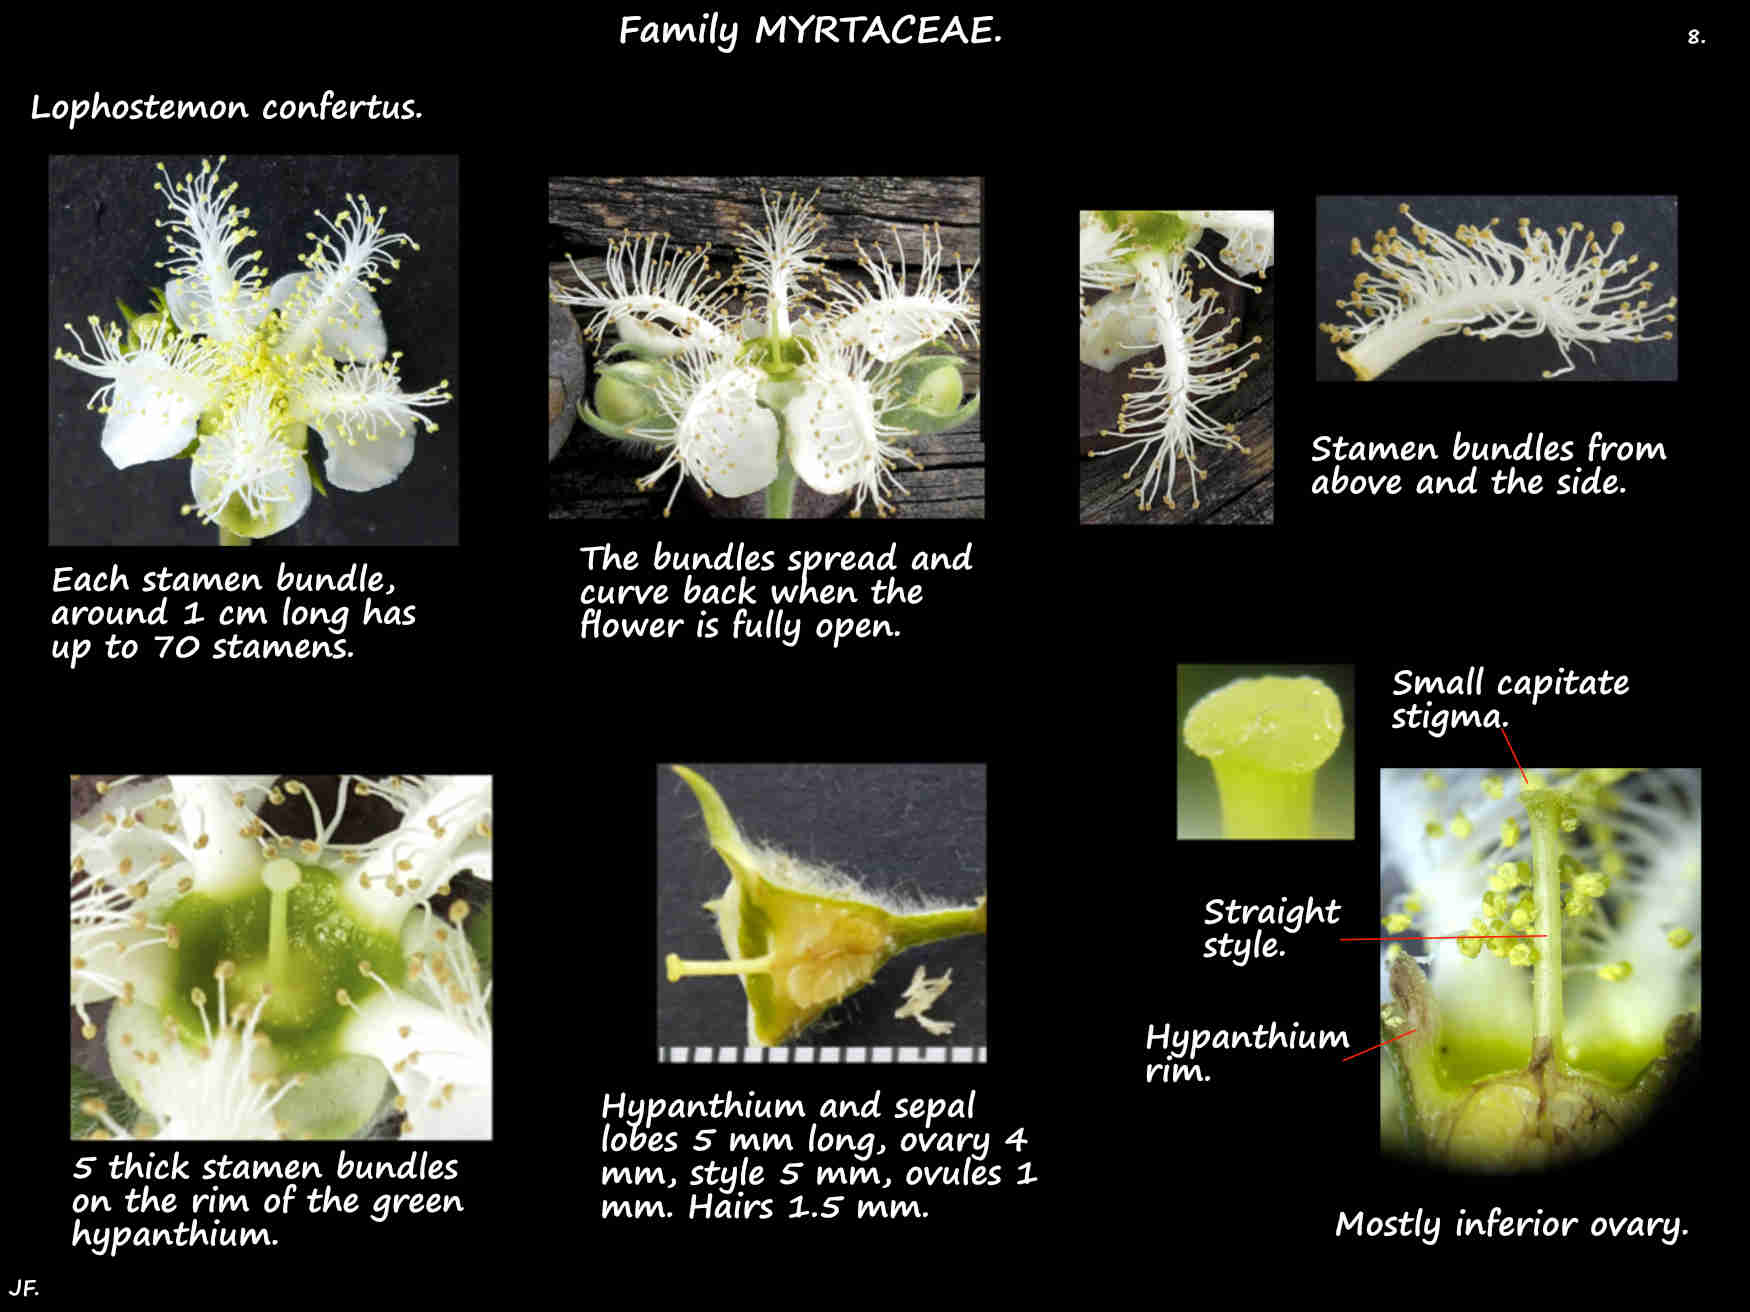 8 Stamen bundles on Lophostemon confertus flowers